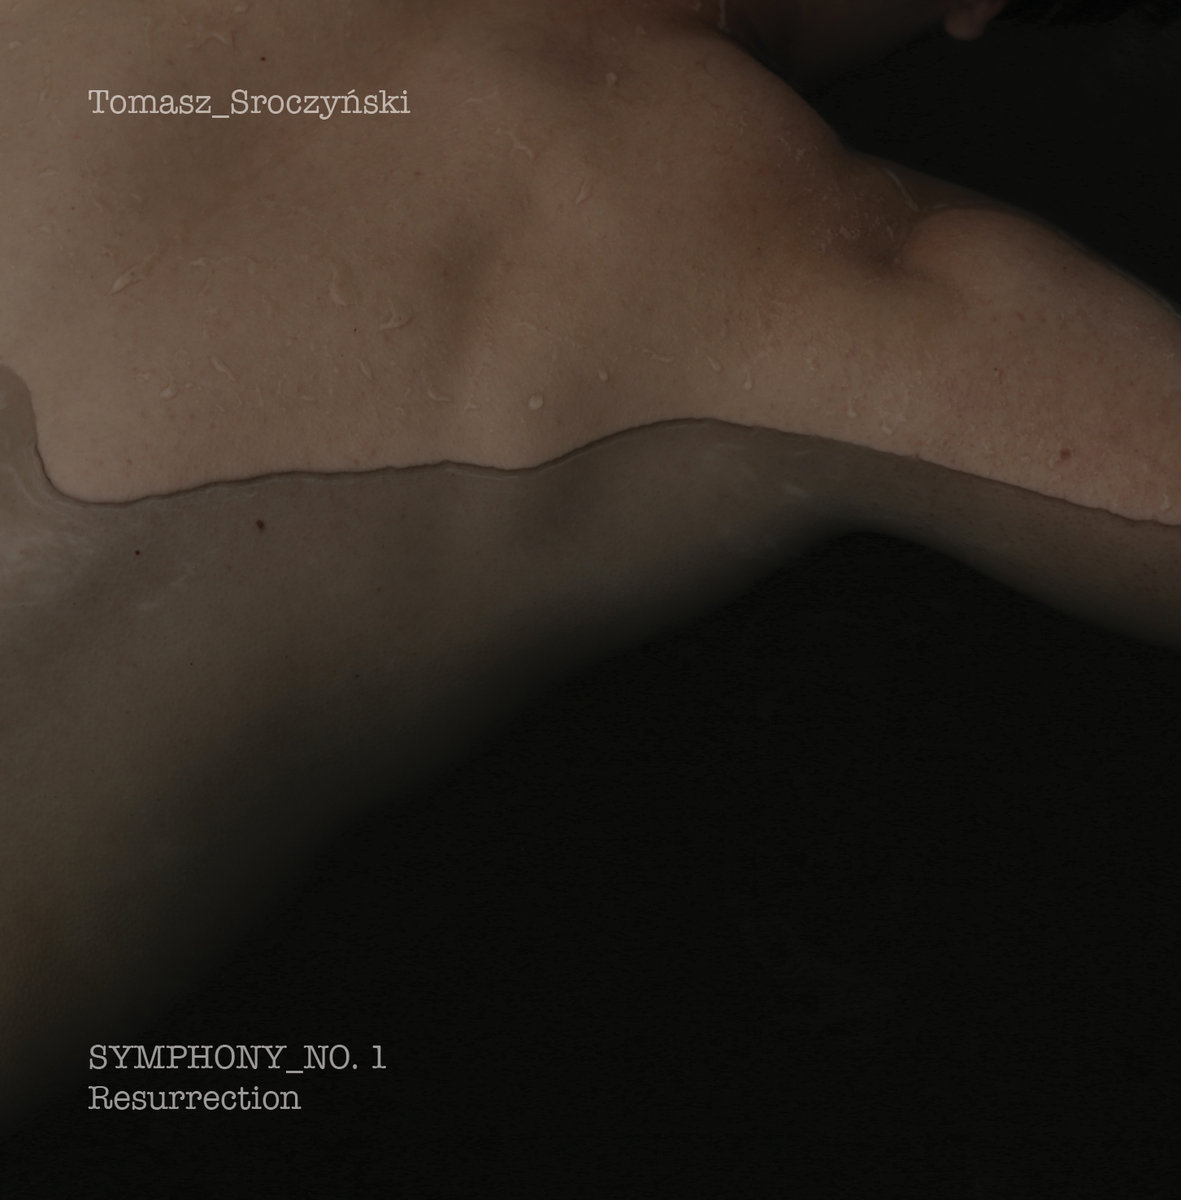 Tomasz Sroczyński - Symphony No. 1 "Ressurection"